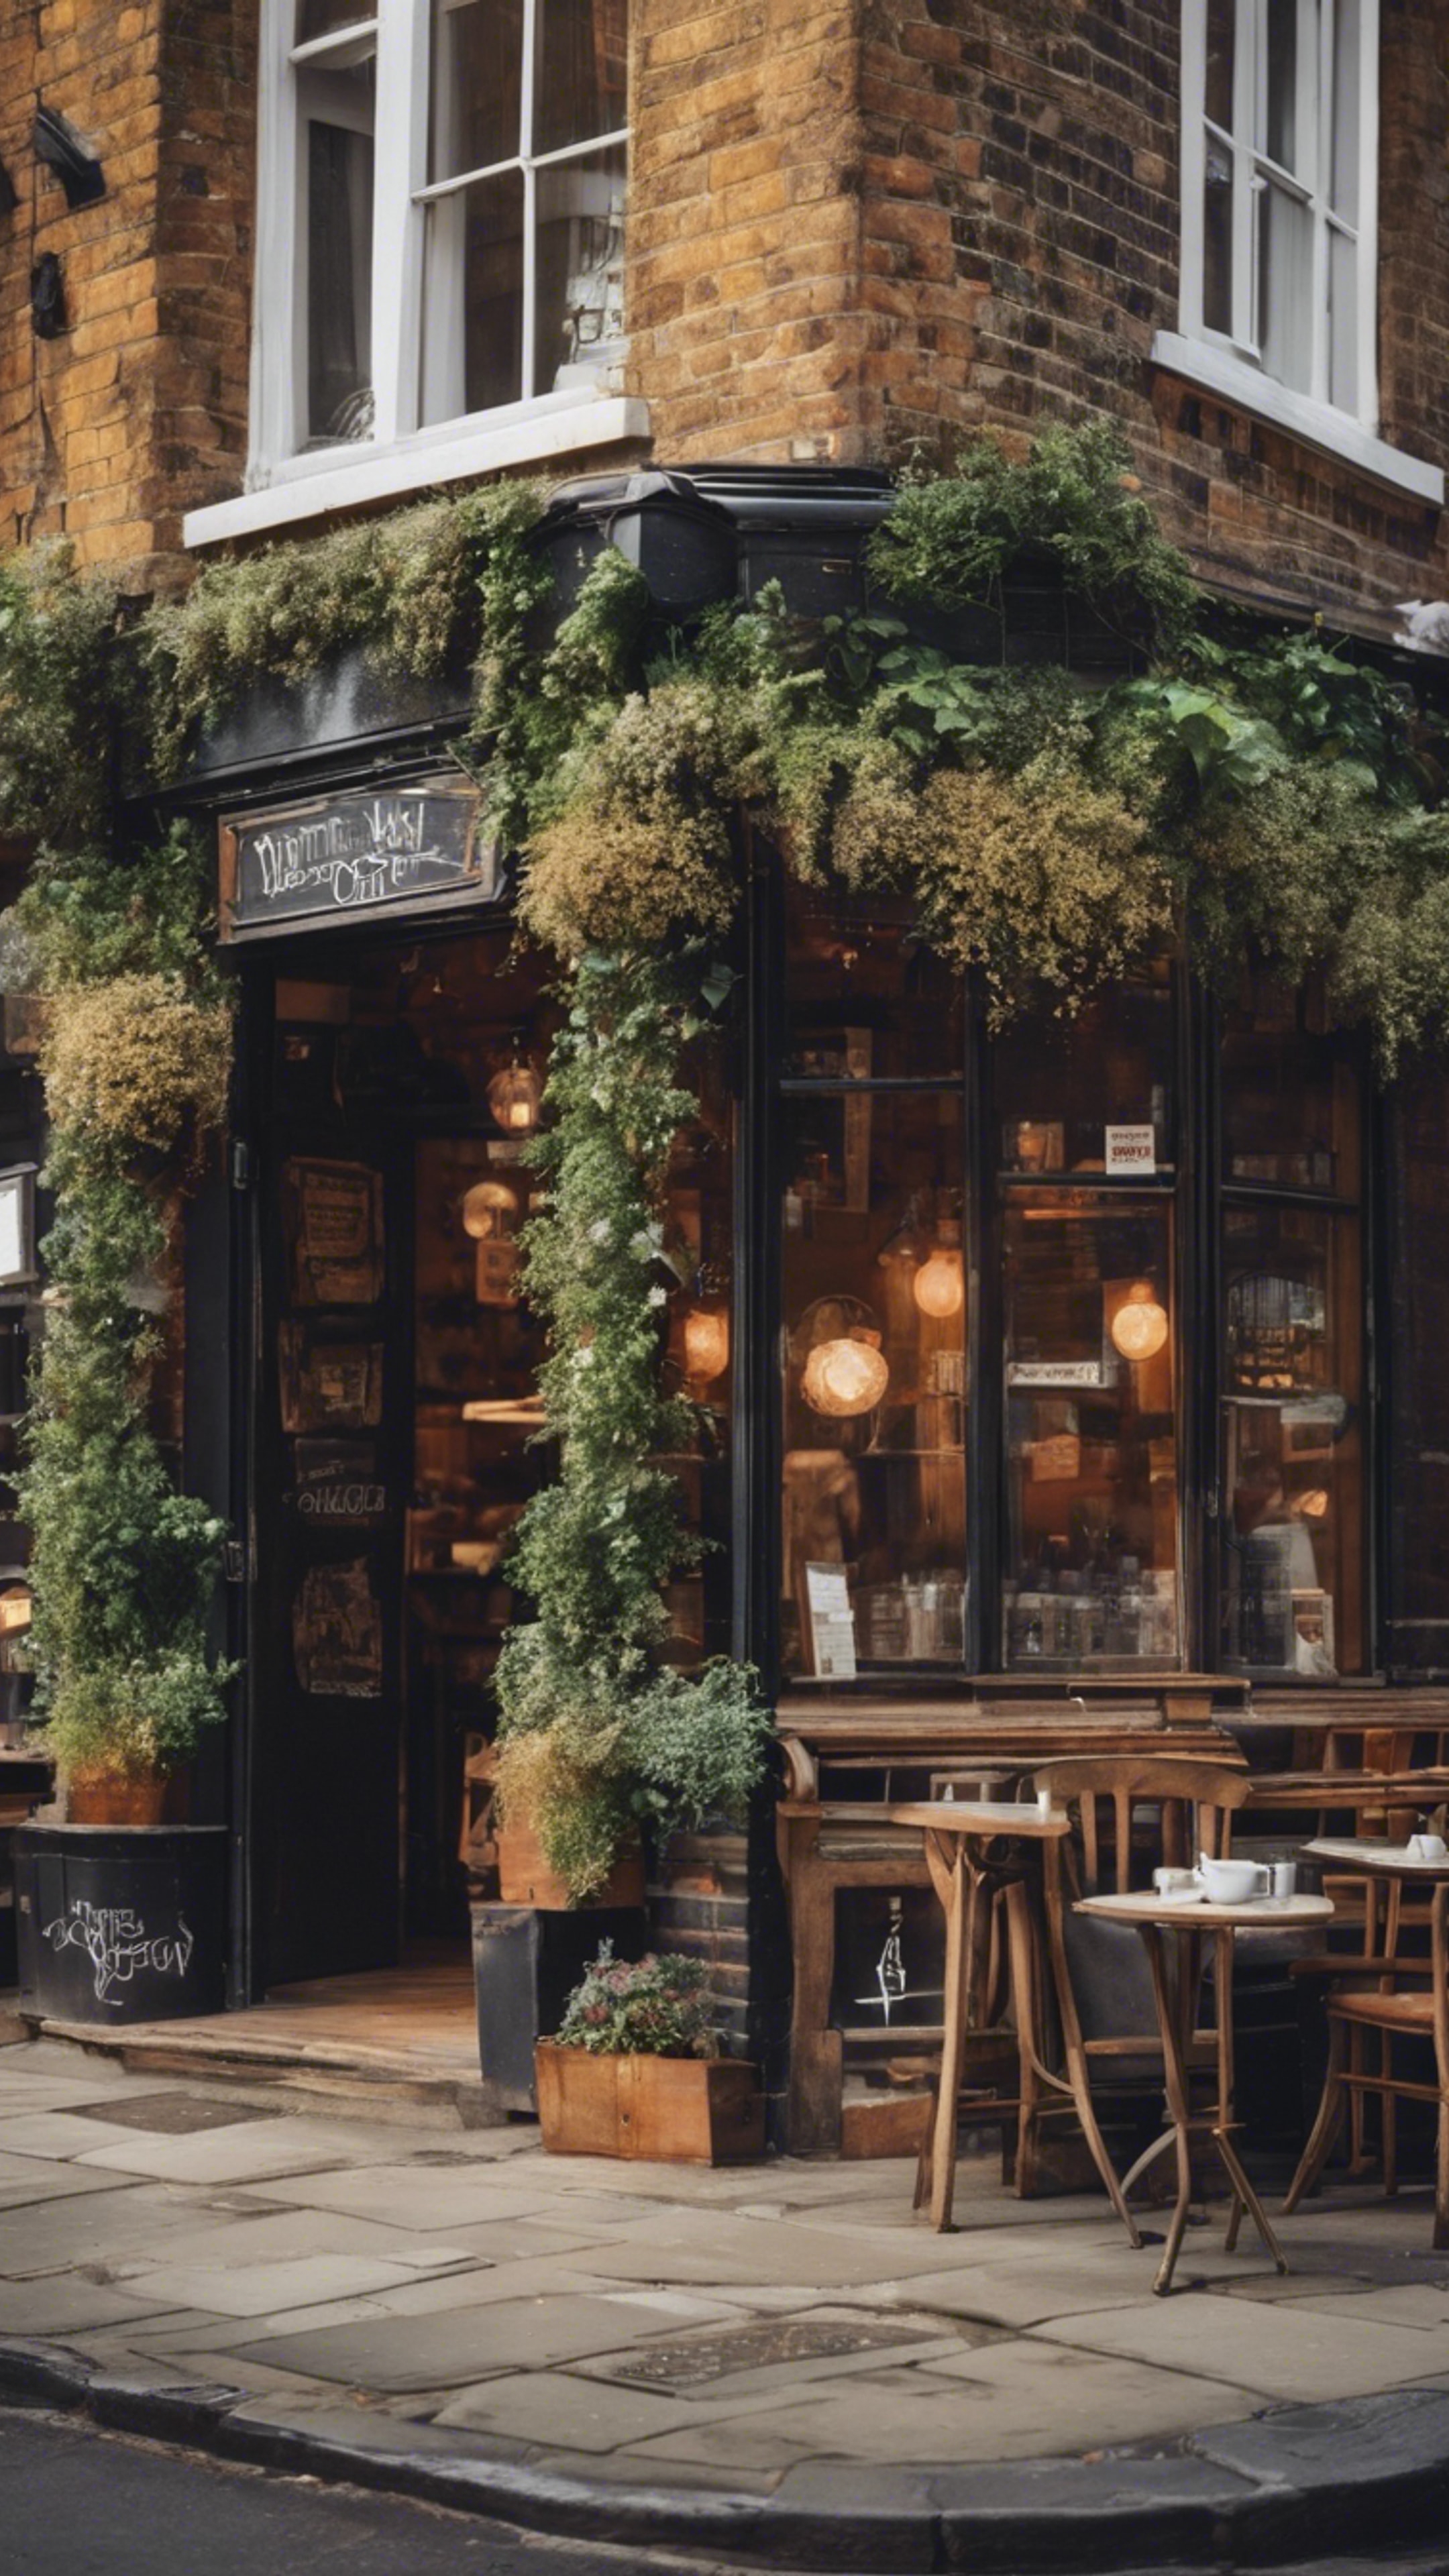 A rustic, quaint little cafe in the heart of London. Hình nền[88734f965efa416ca947]